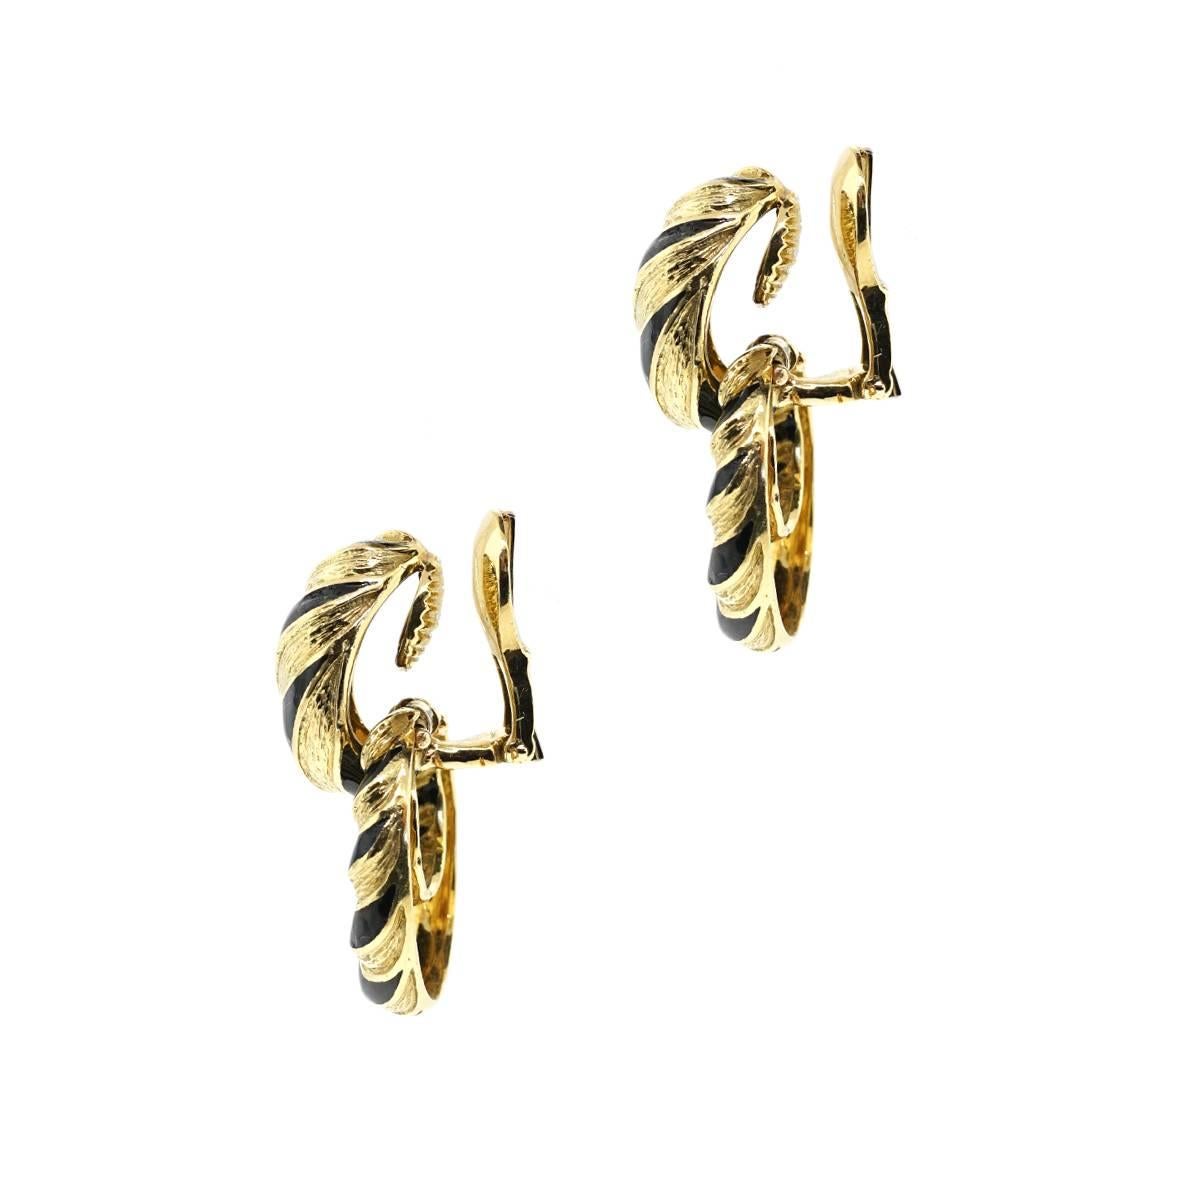 Style: Door knocker Earrings
Material: 18K yellow gold
Measurements: 1.25